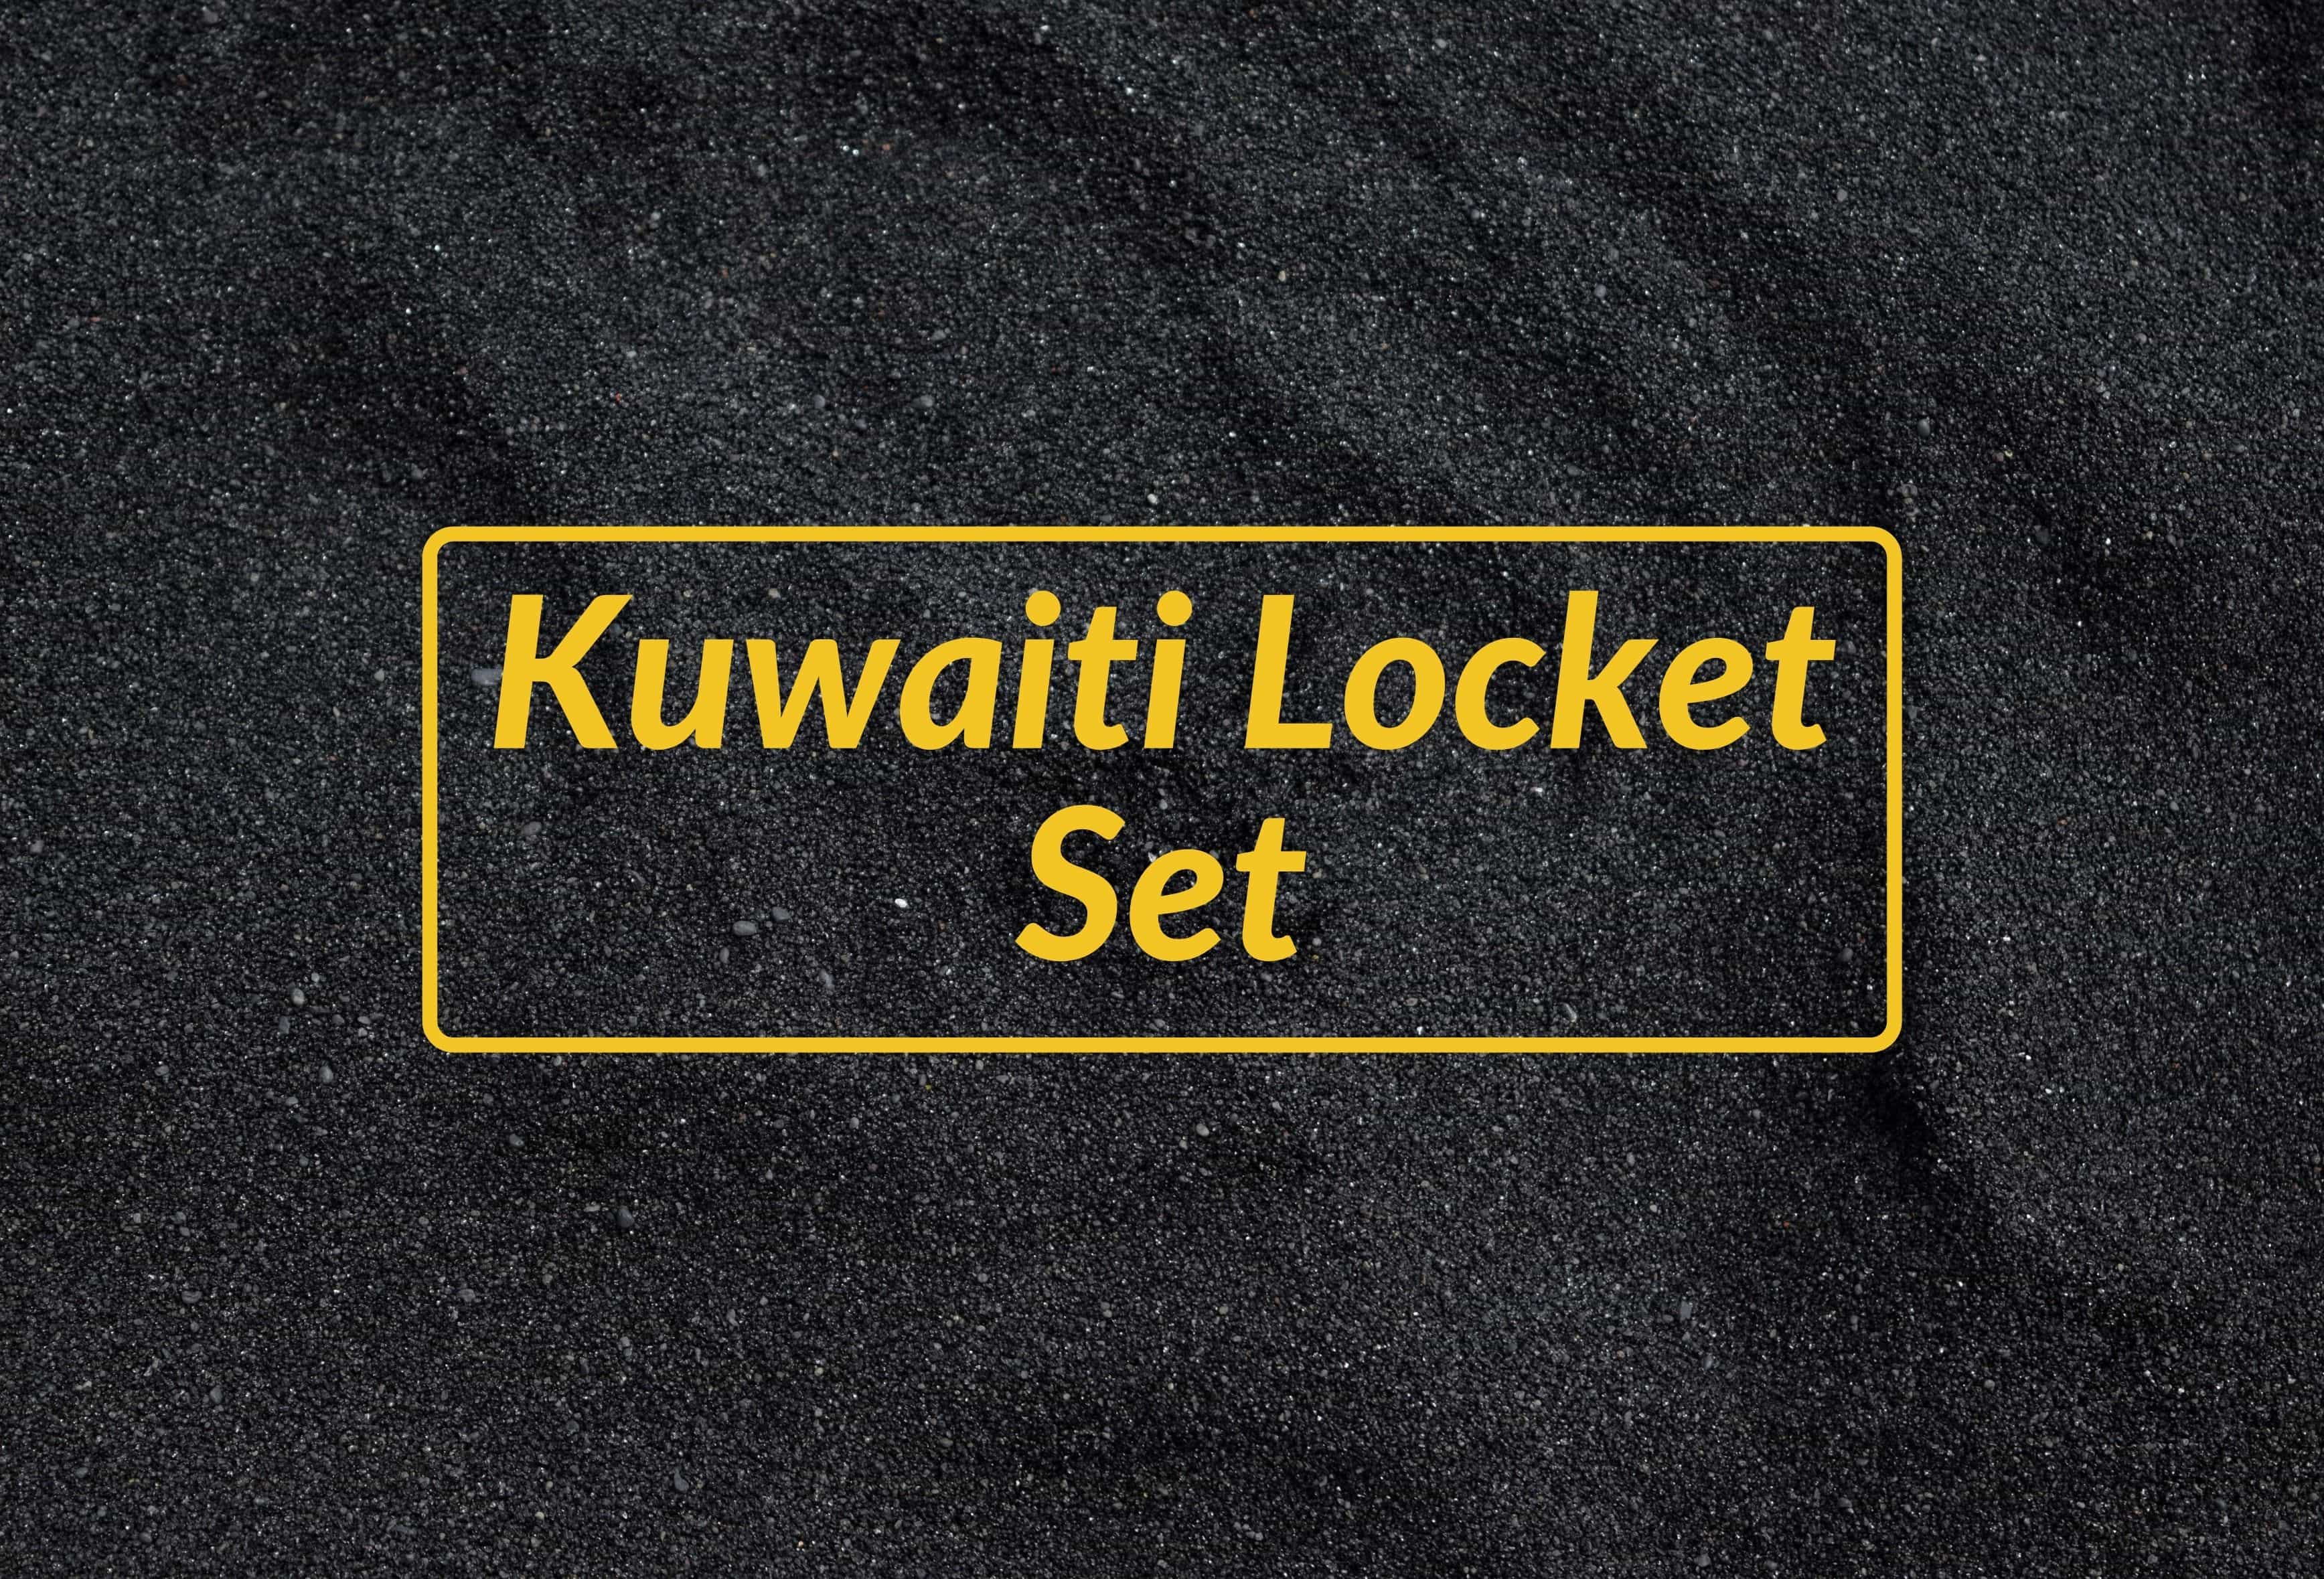 Kuwaiti Locket Set